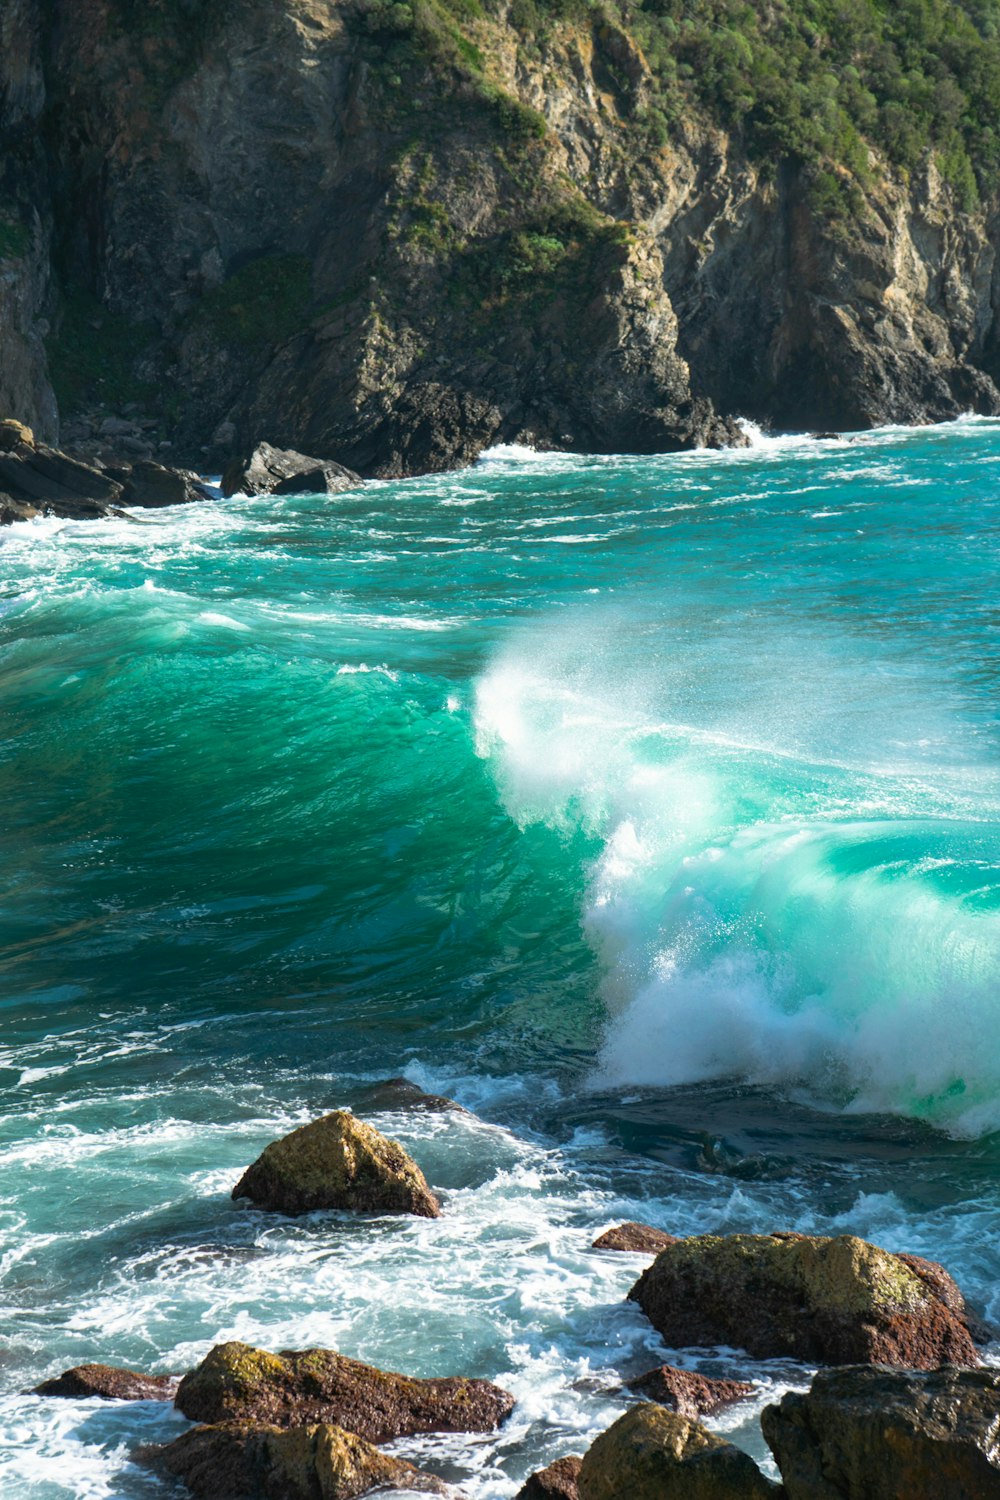 ocean waves hitting rocky shore during daytime